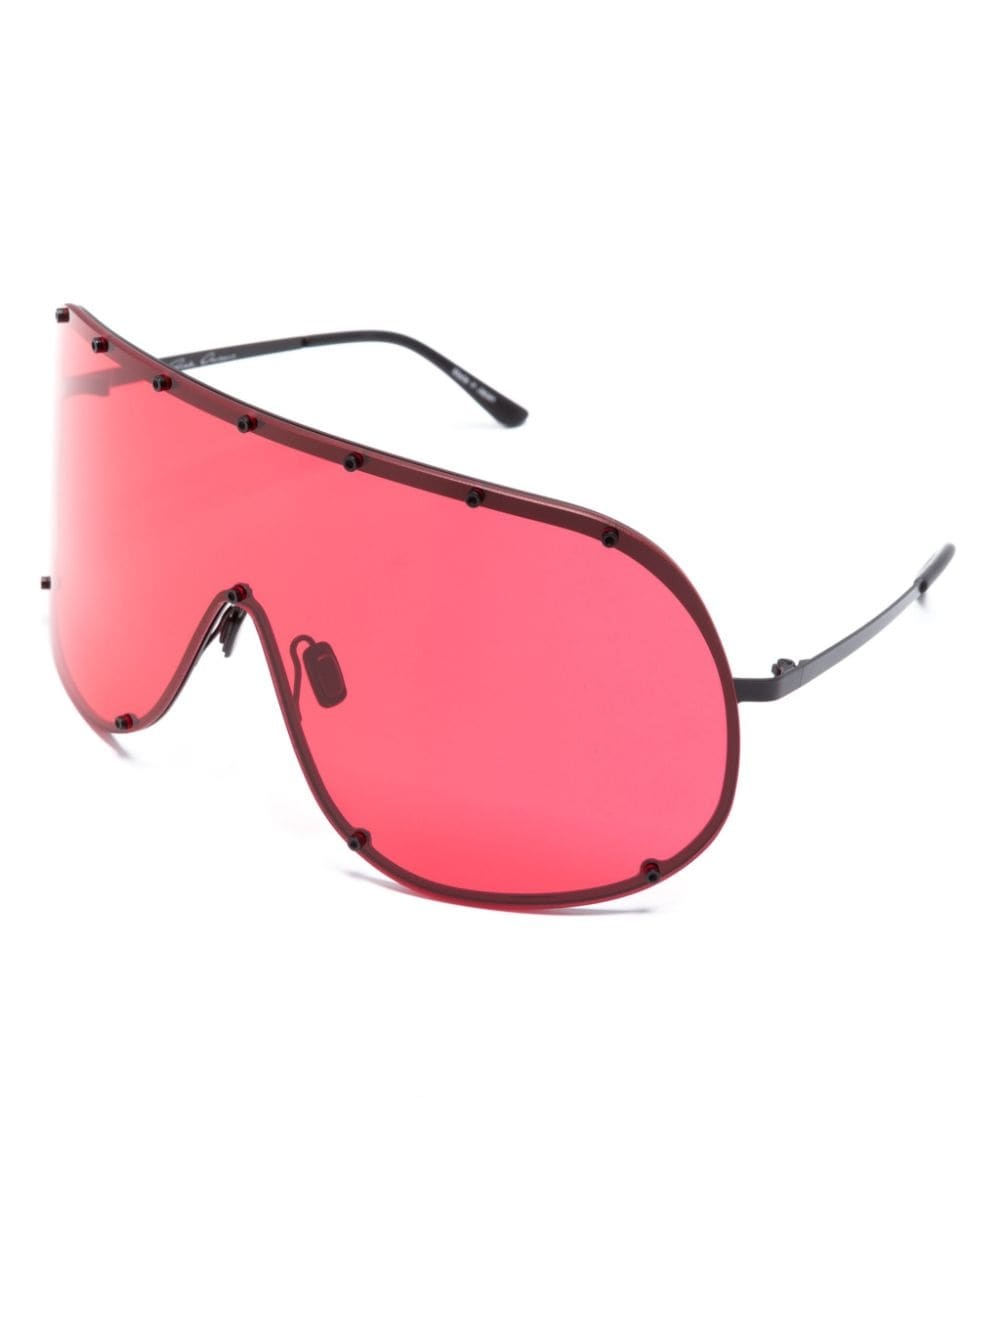 shield-frame tinted sunglasses - 2